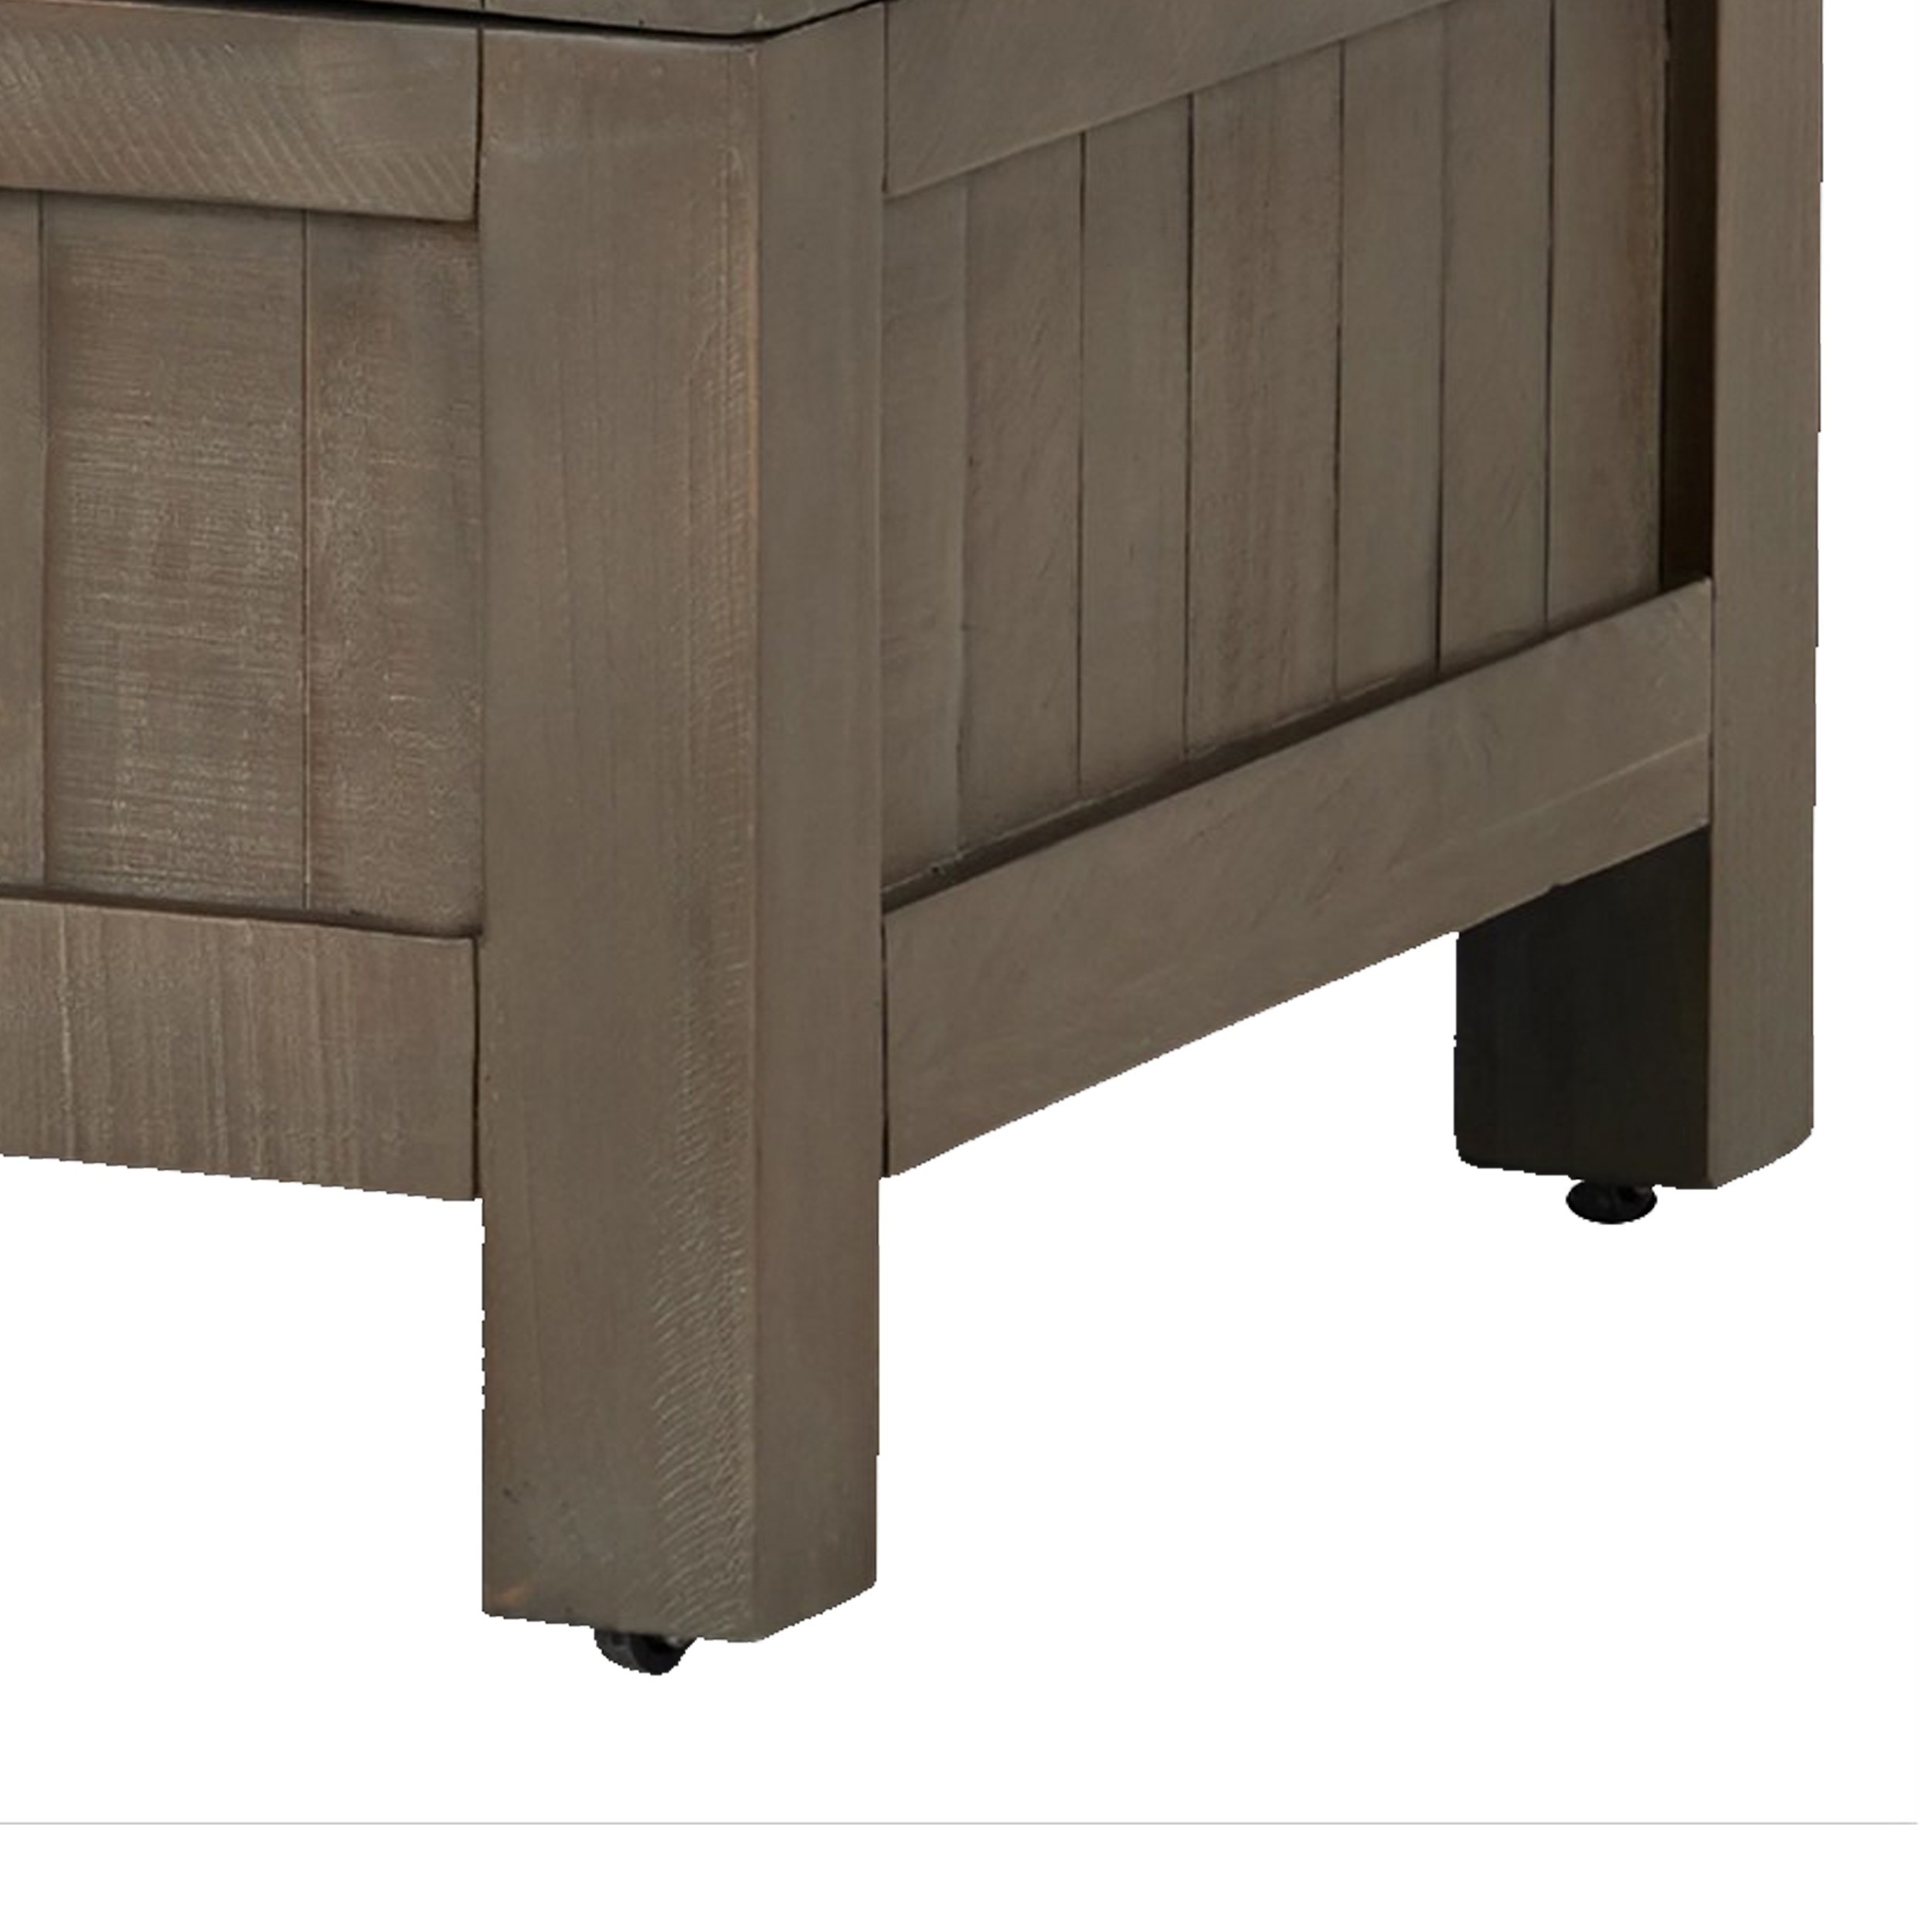 Tarn 48 Inch Coffee Table With Lift Top, Trunk Design, Rustic Gray Wood -Saltoro Sherpi